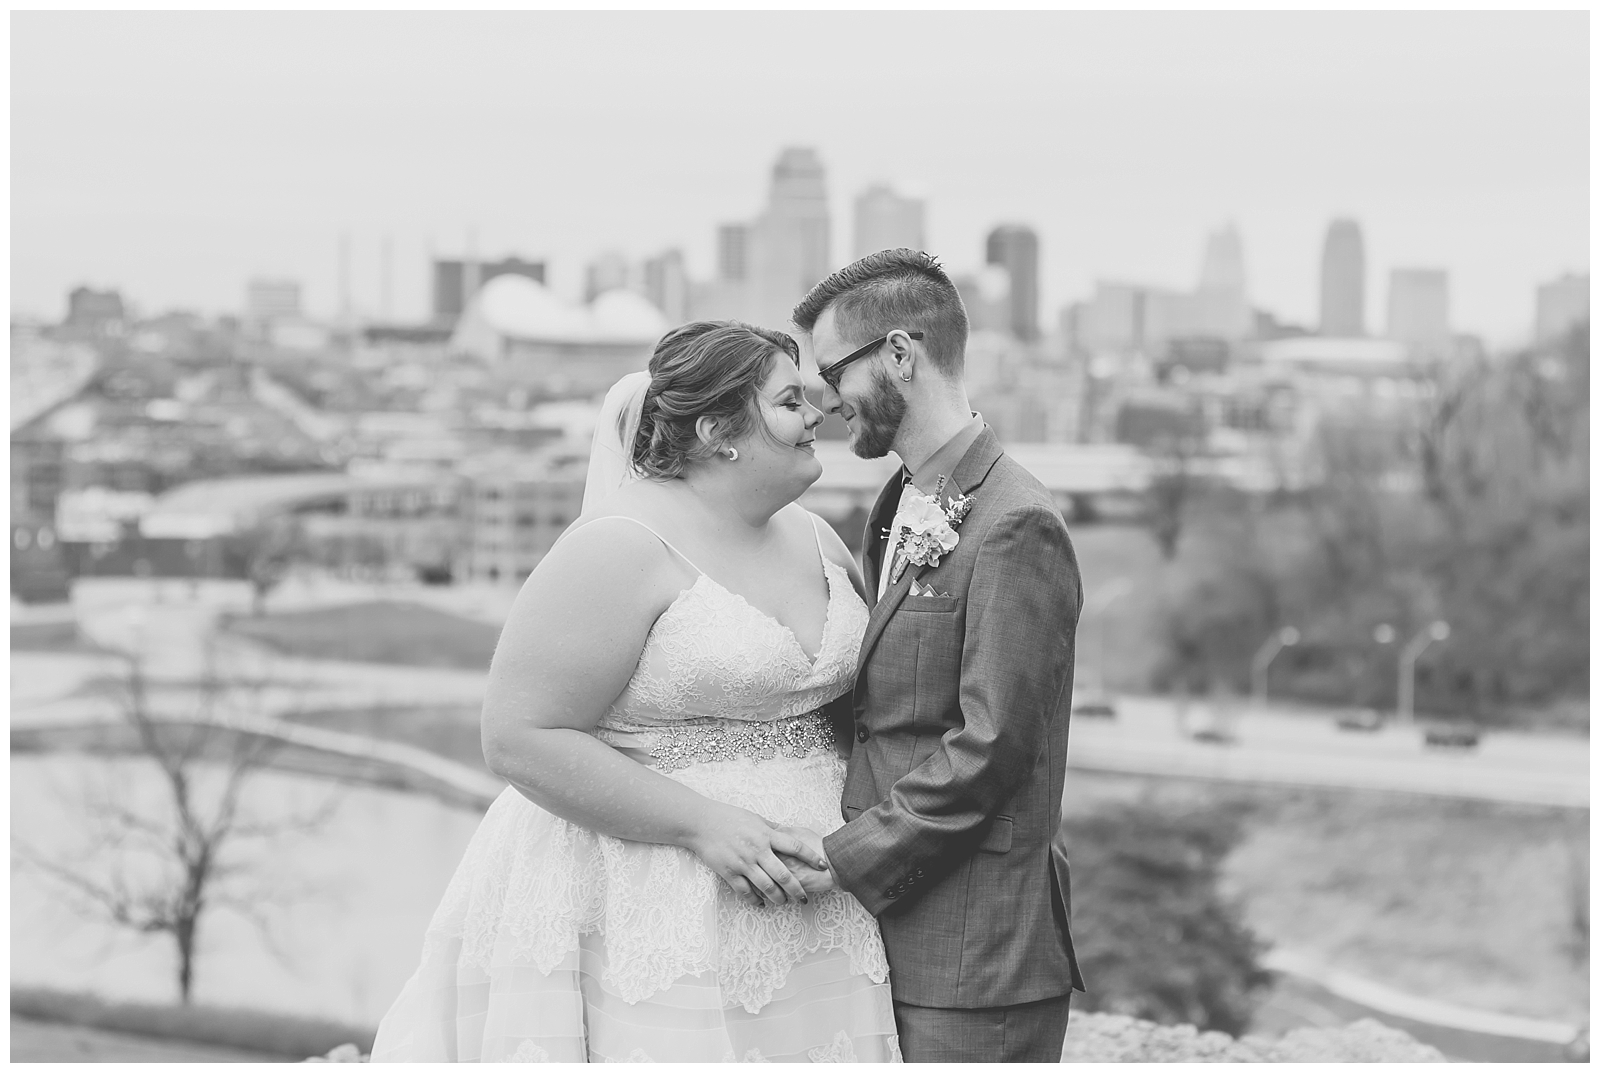 Wedding photography at Penn Valley Park by Kansas City wedding photographers Wisdom-Watson Weddings.